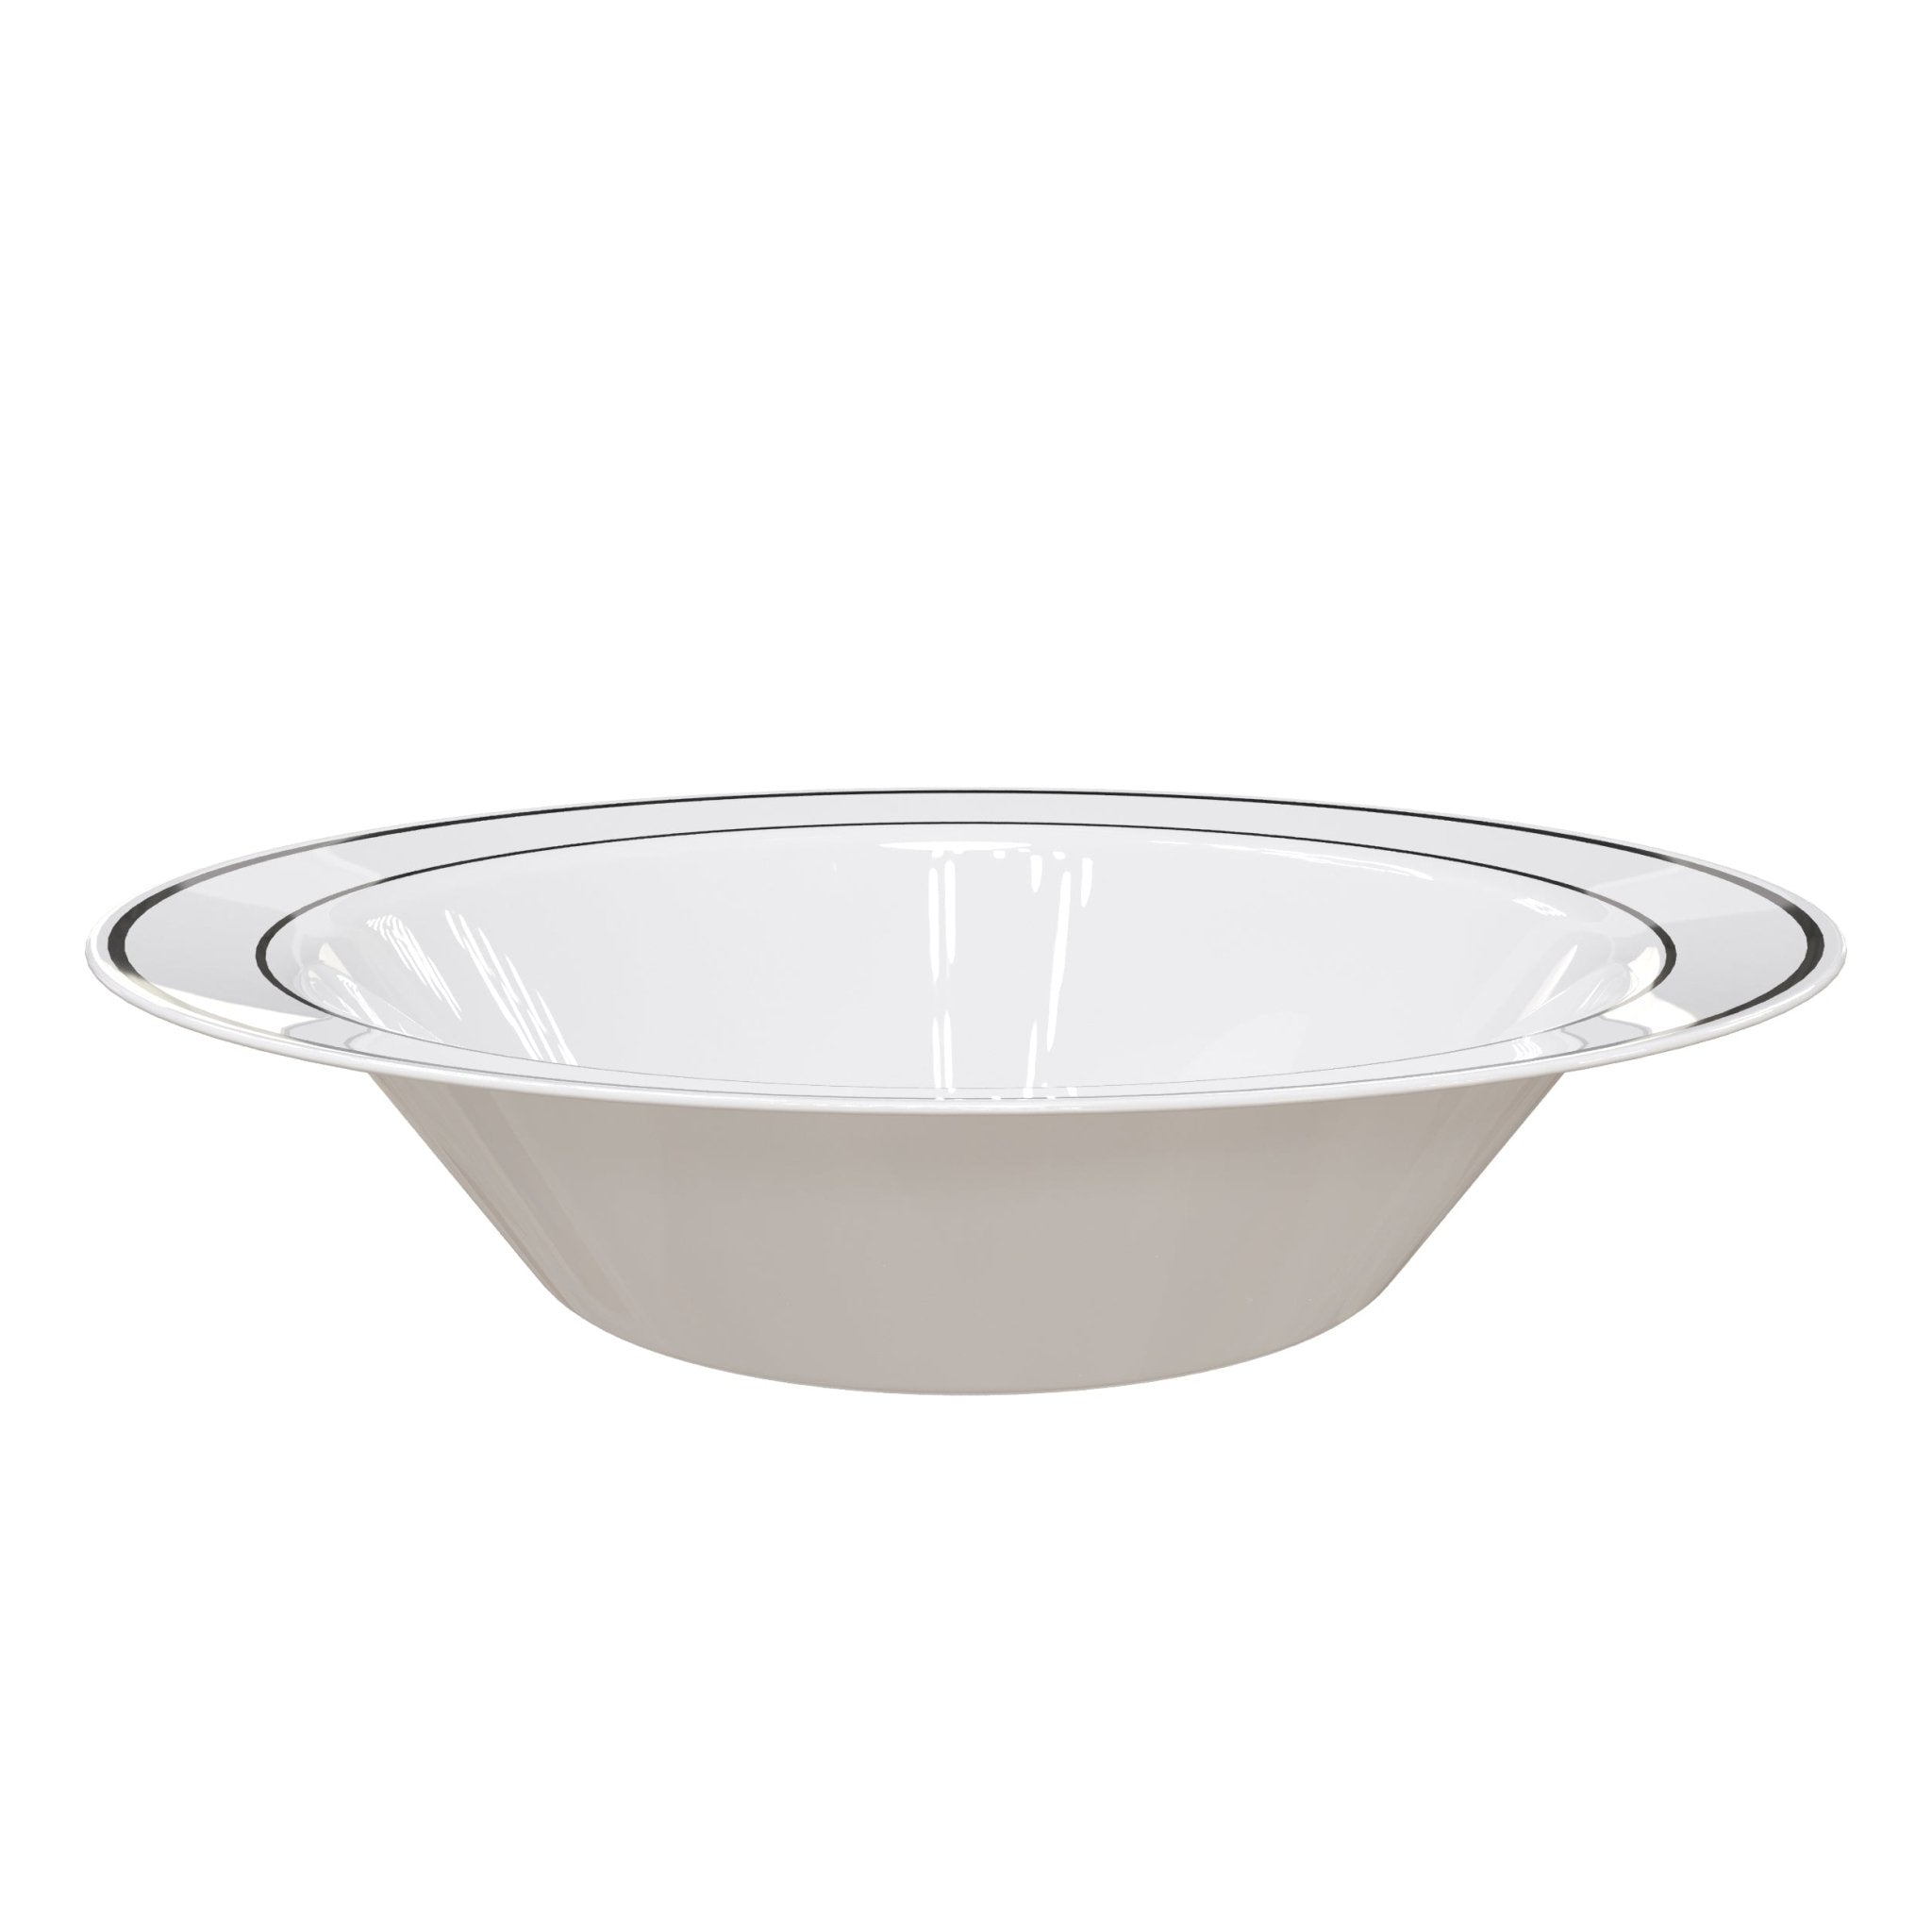 14 oz. White/Silver Line Design Plastic Bowls (120 Count)